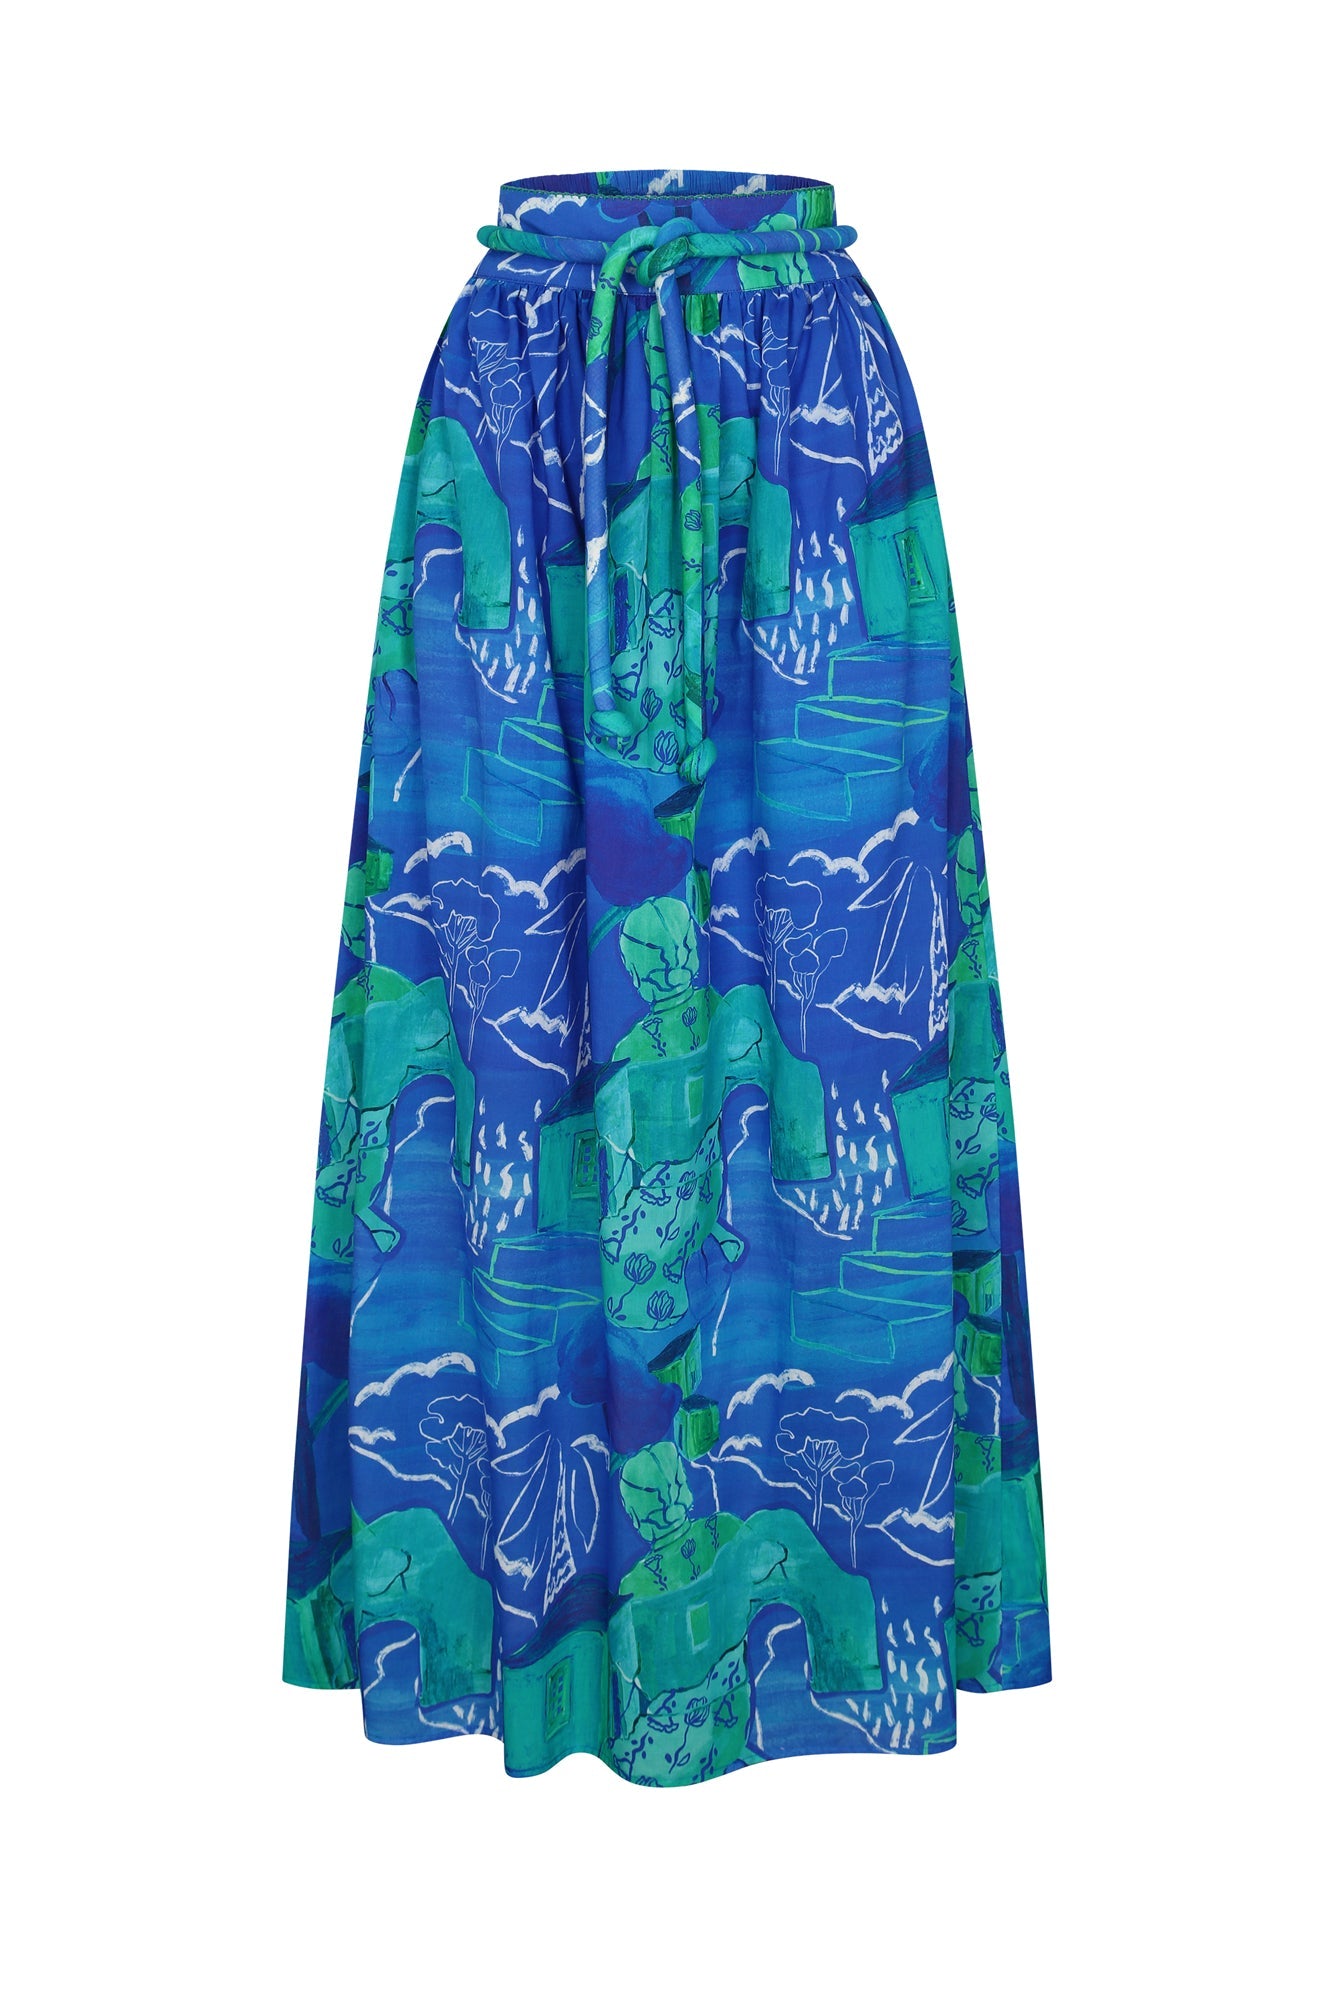 Encantada Skirt in Siembra Azul Print